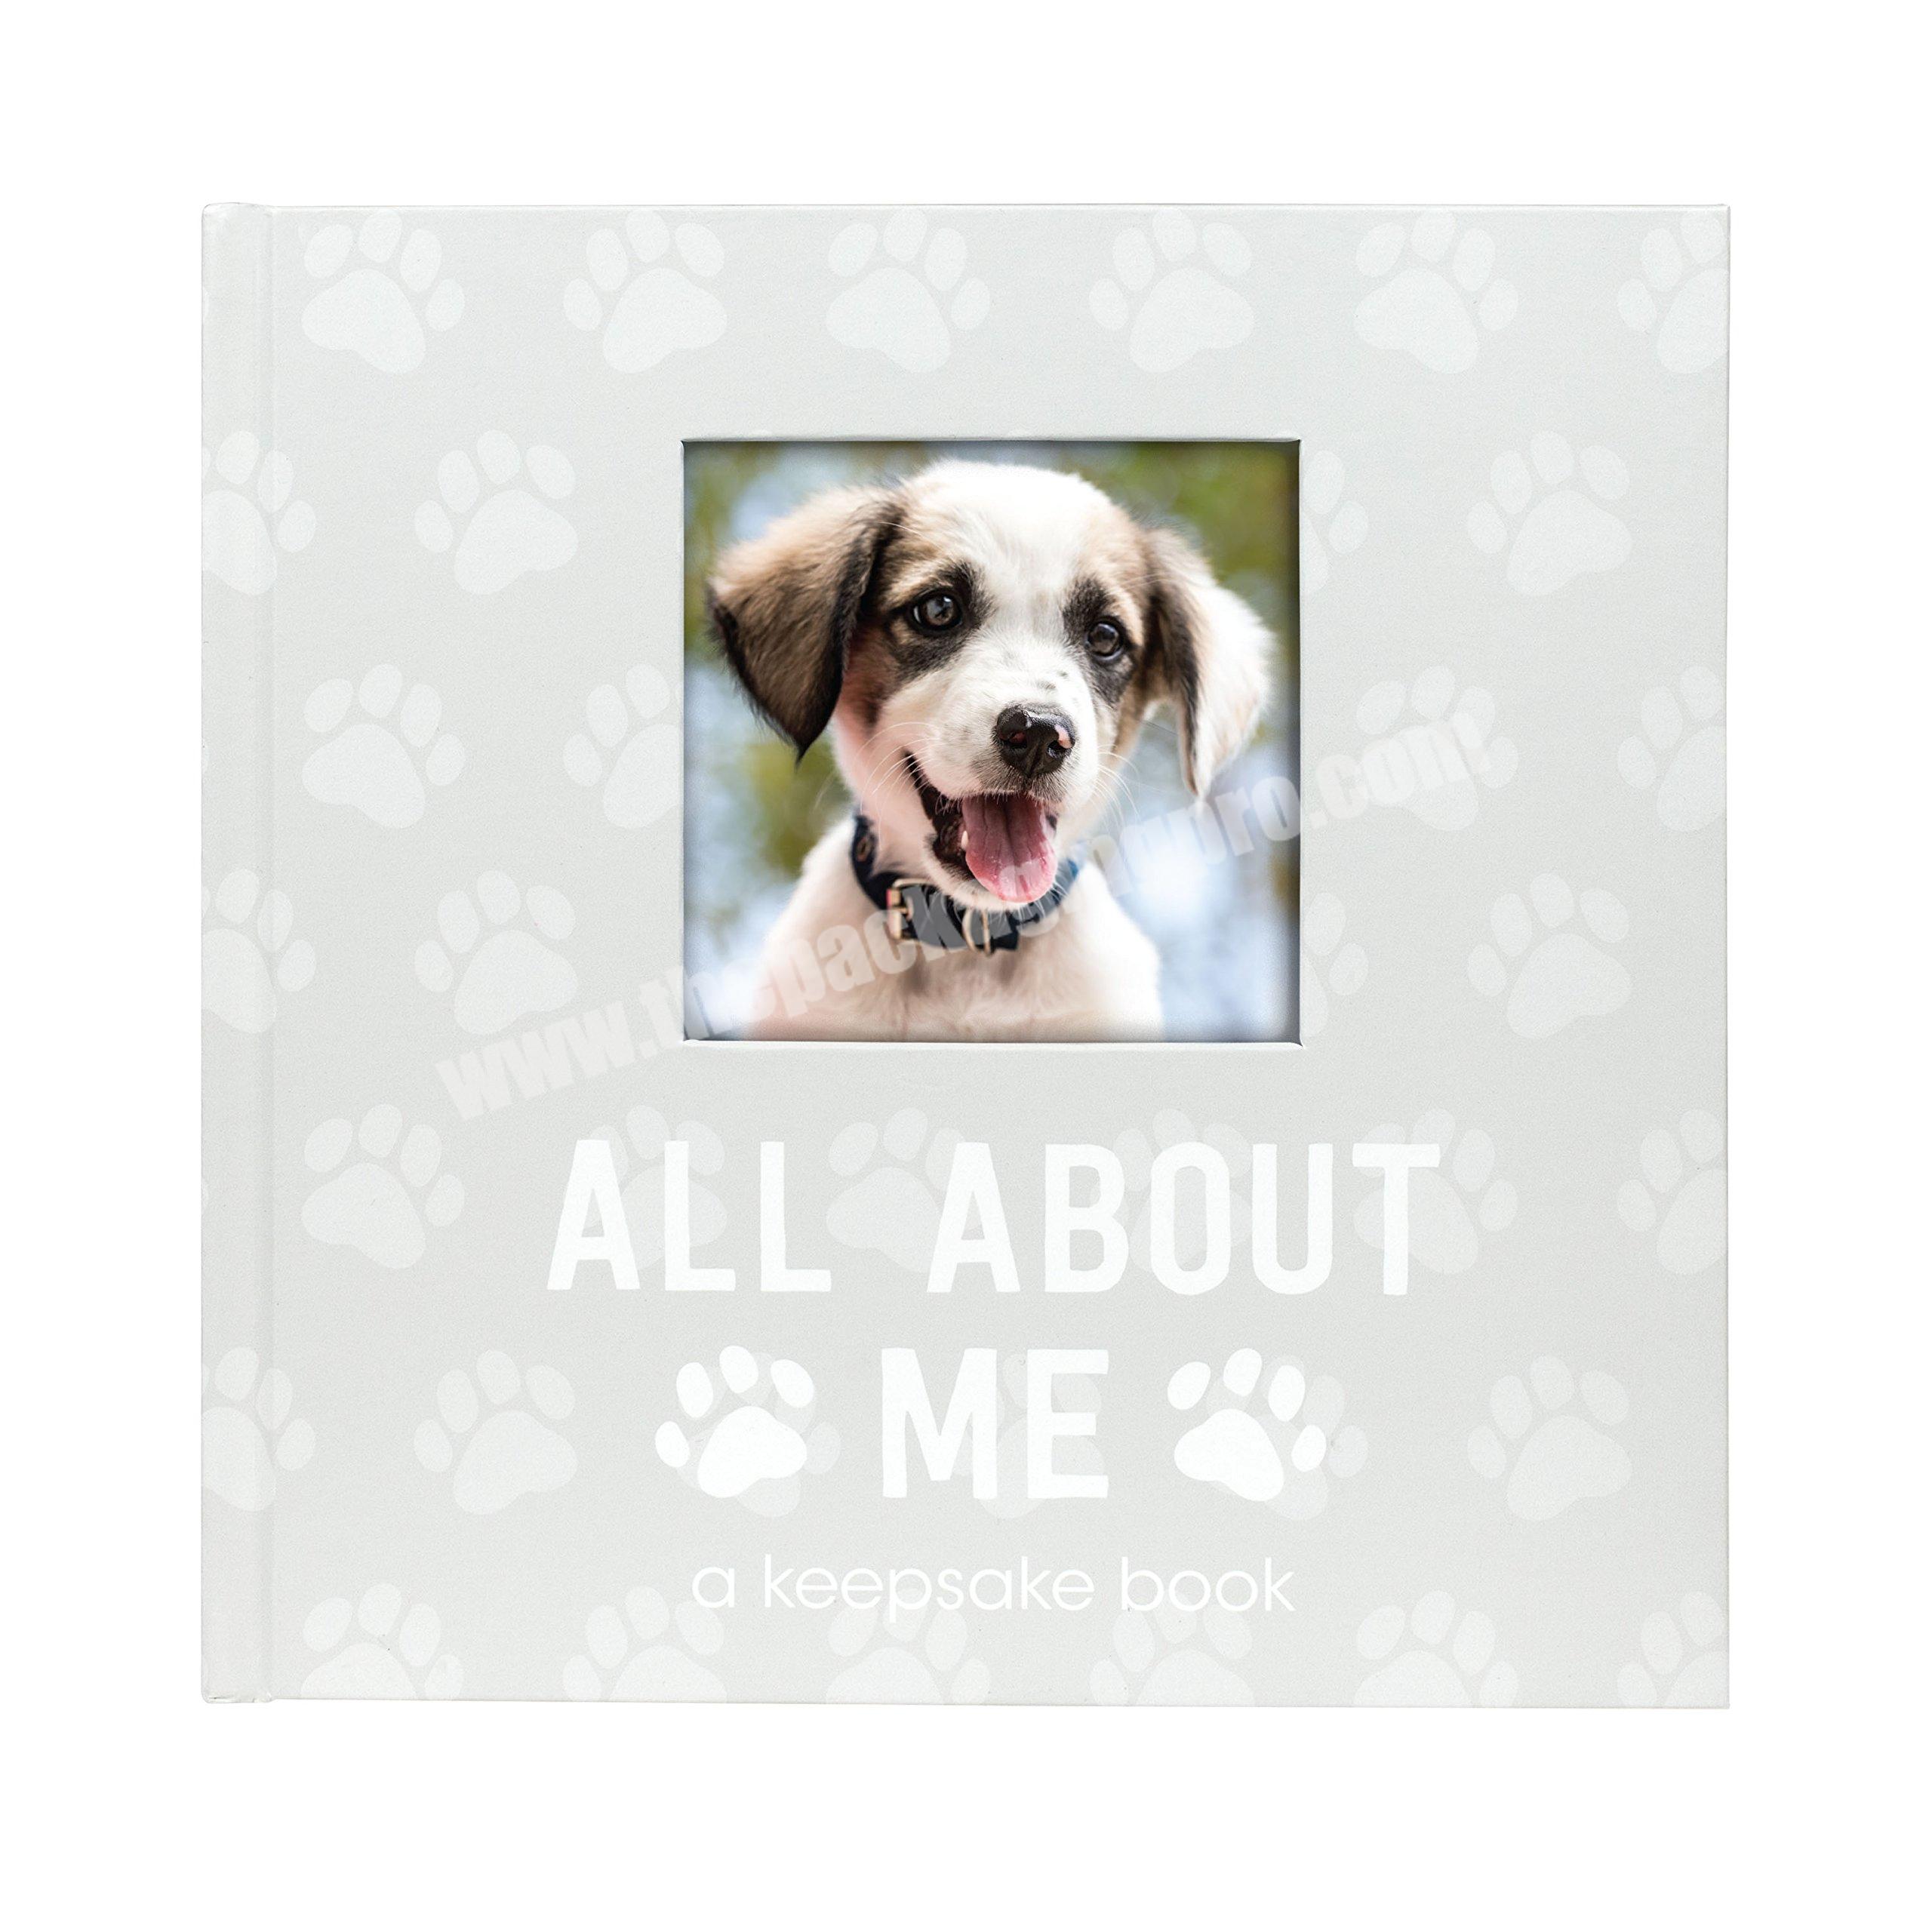 Personalized Pet Puppy Dog Keepsake Milestone Book Memory Photo Book